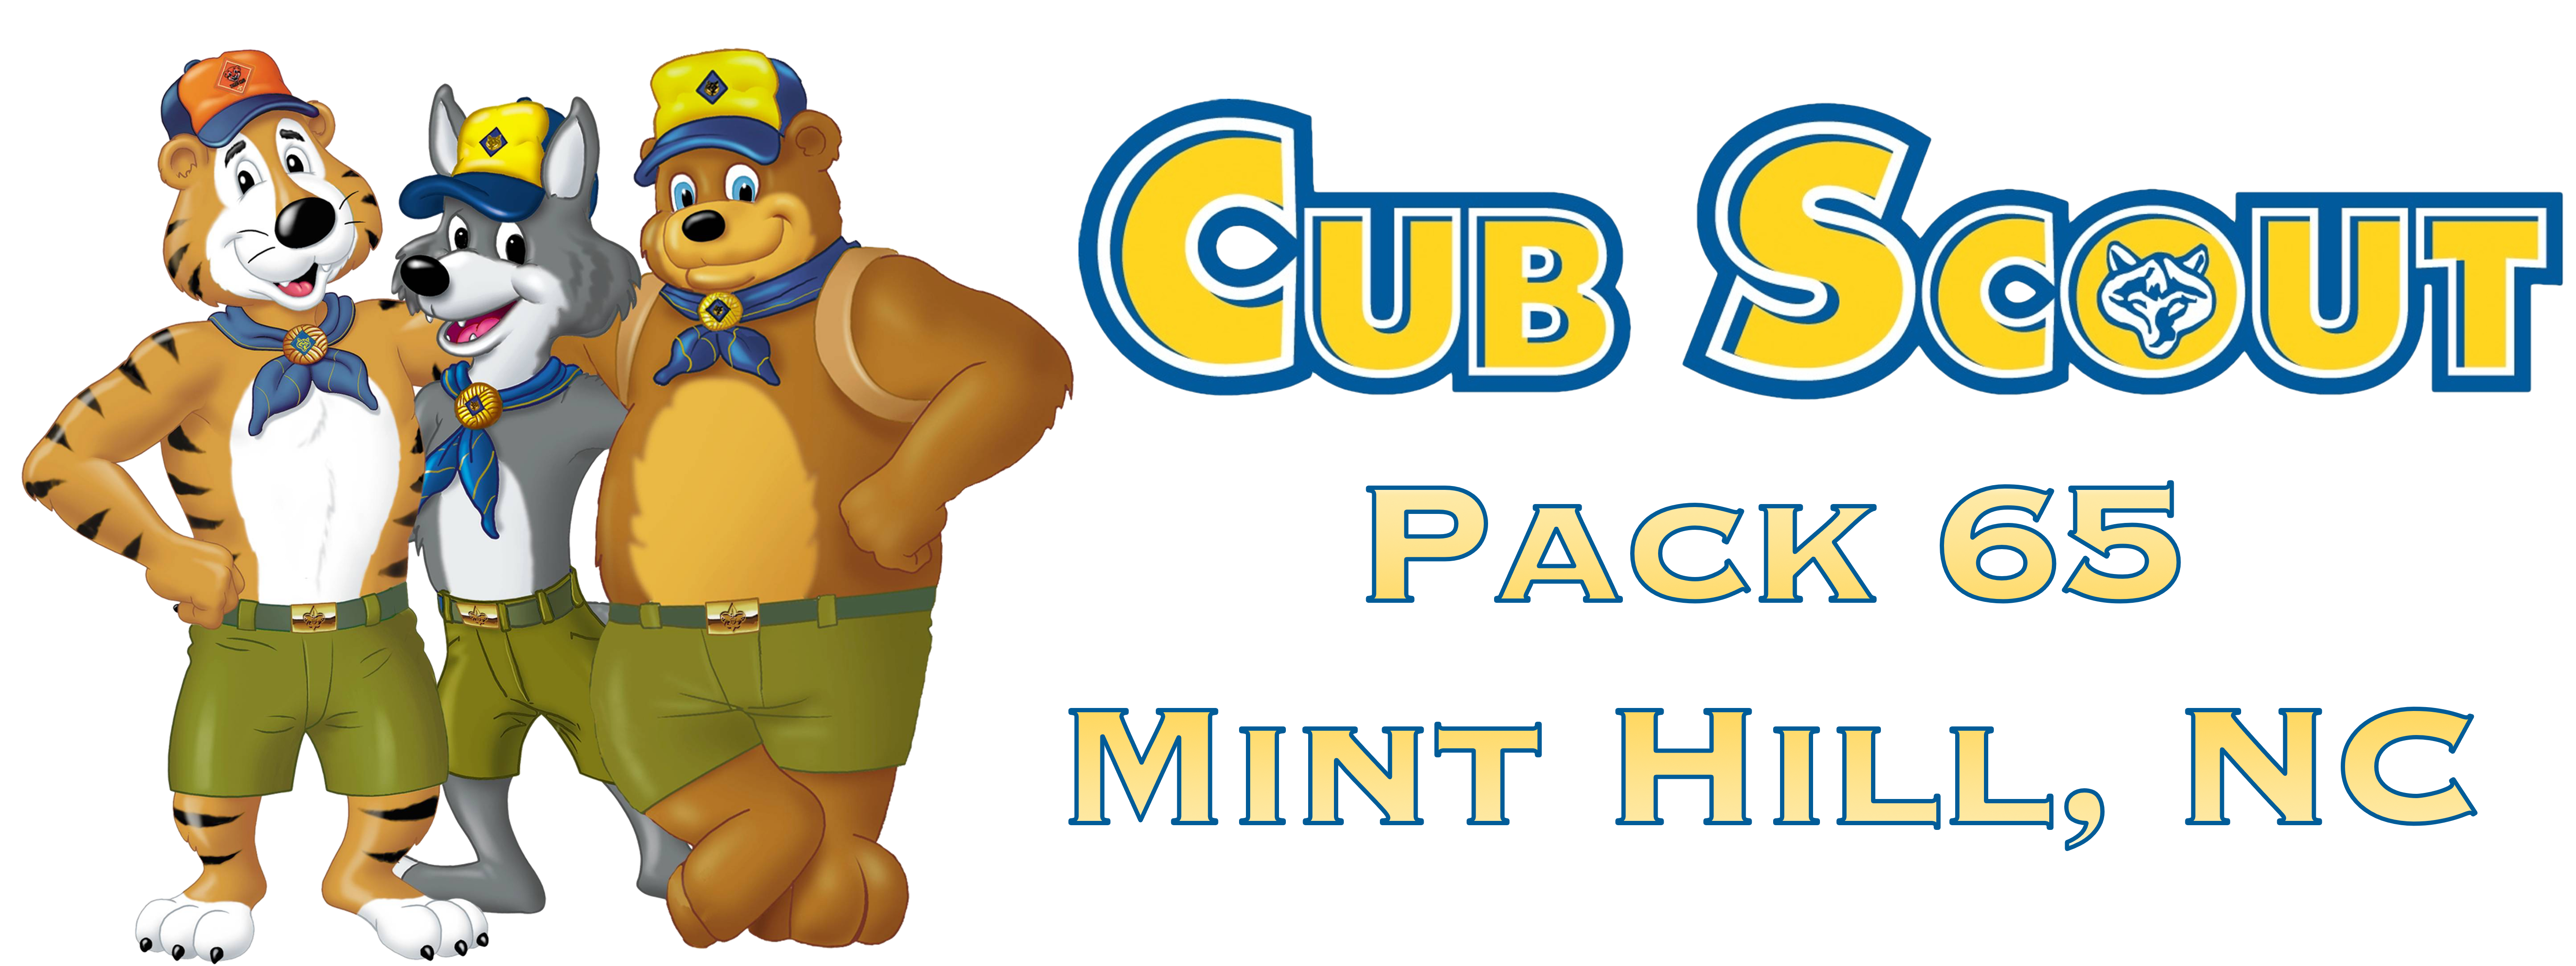 Cub Scout Pack 65 | Mint Hill, NC